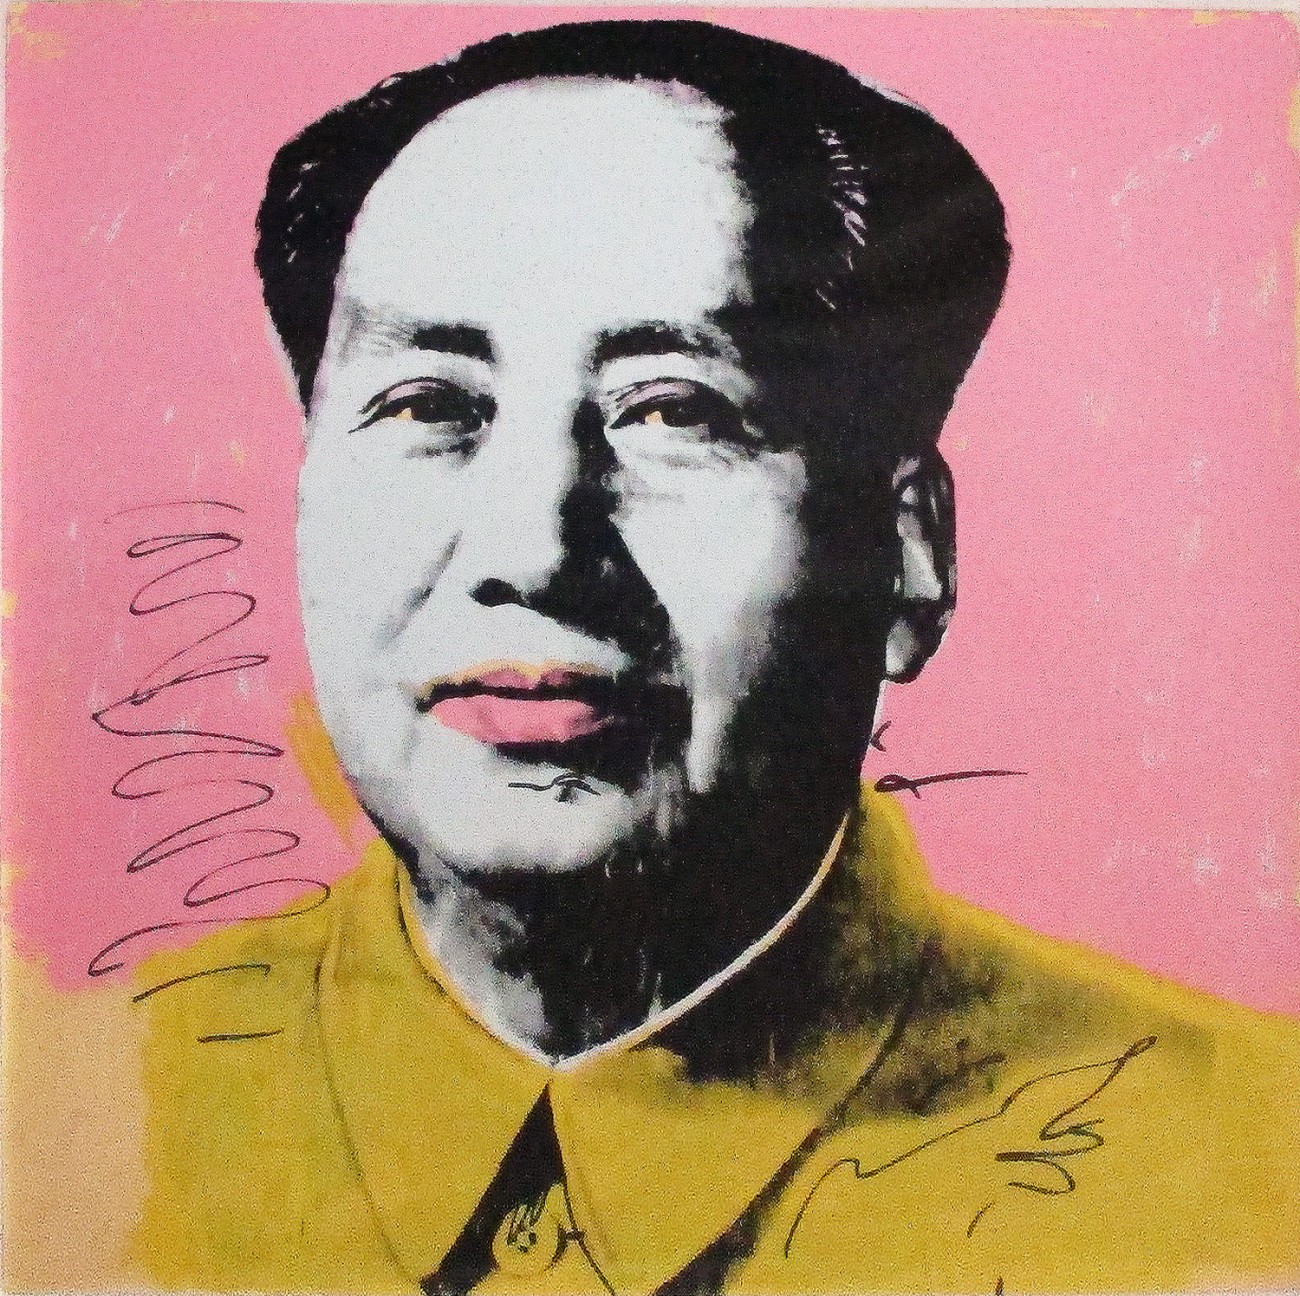 Andy Warhol | Mao 91 | 1972 | Image of Artists' work.